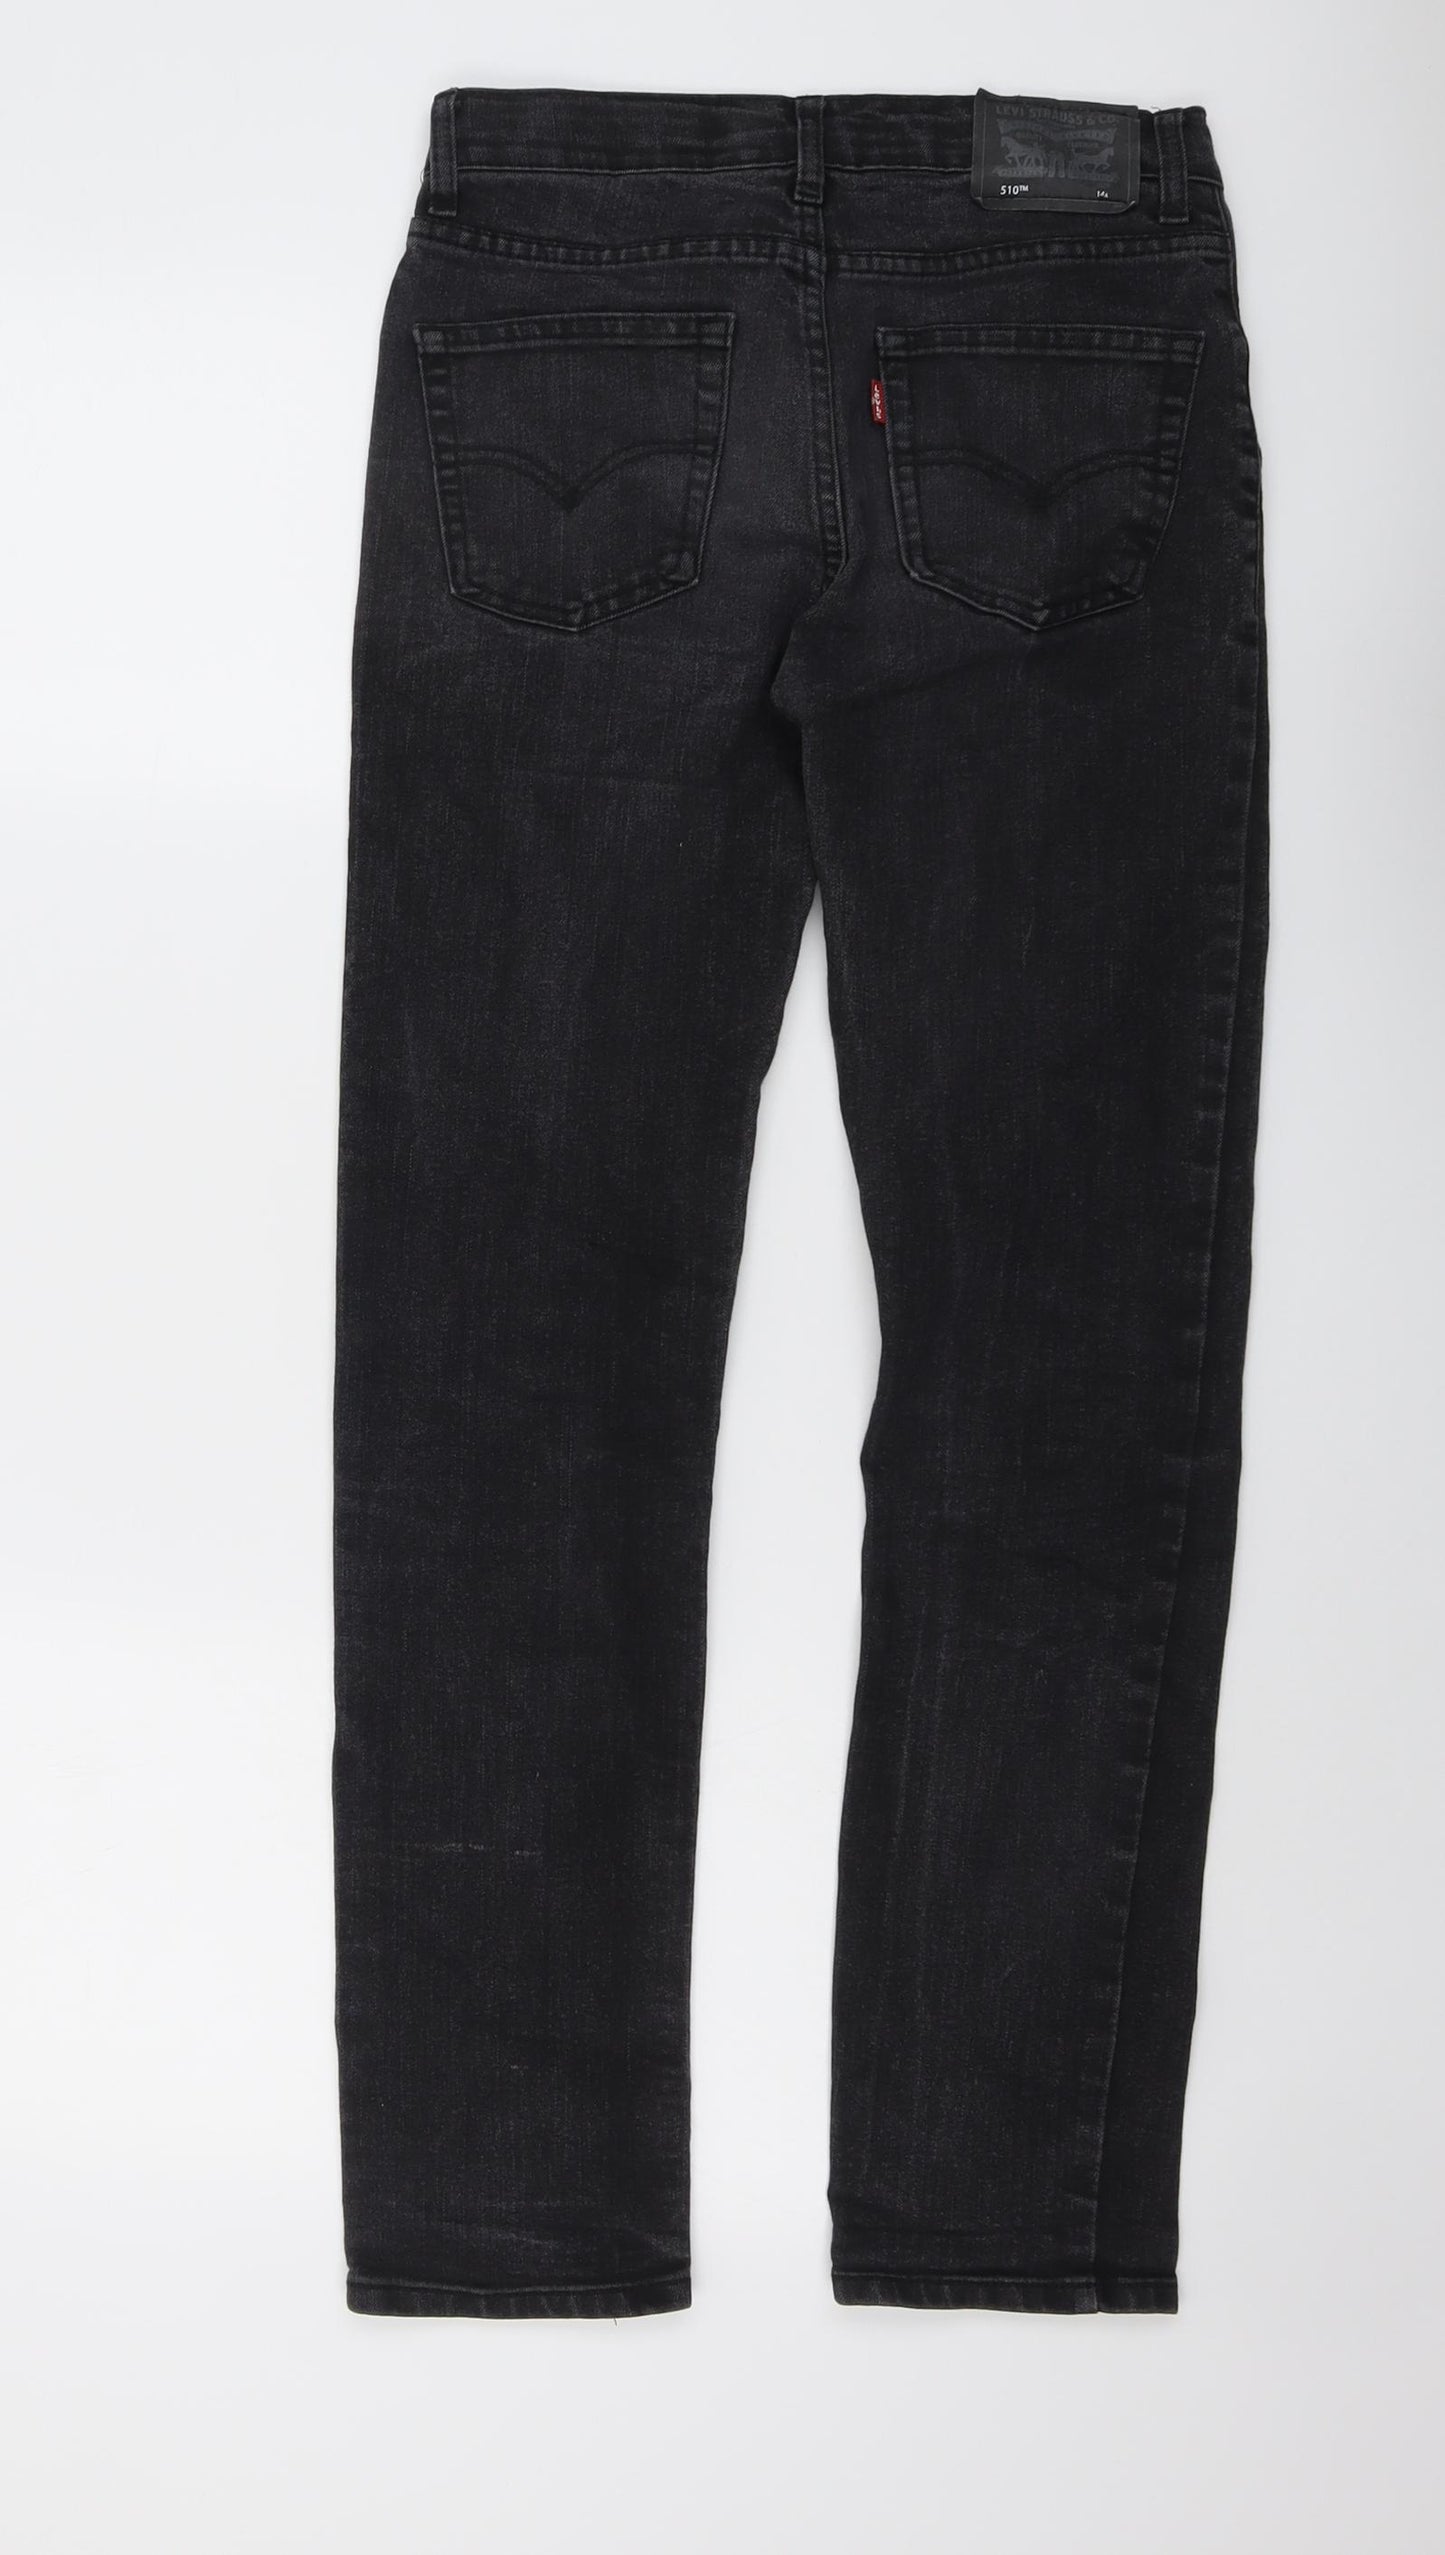 Levi's Boys Black Cotton Straight Jeans Size 14 Years Regular Button